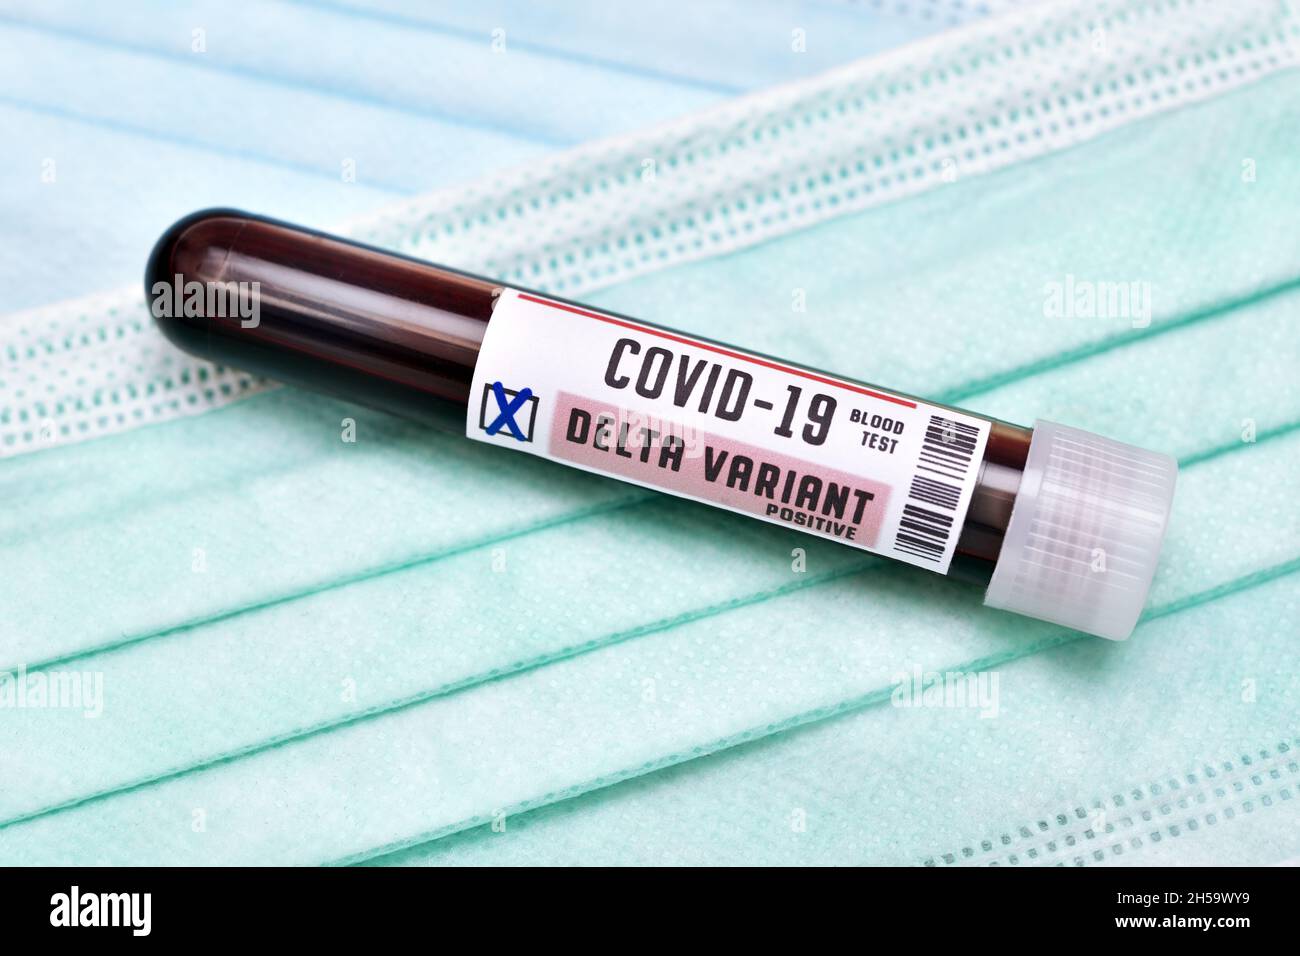 Blutprobe mit Coronavirus Delta-variante B.1.617.2, Symbolfoto Foto Stock